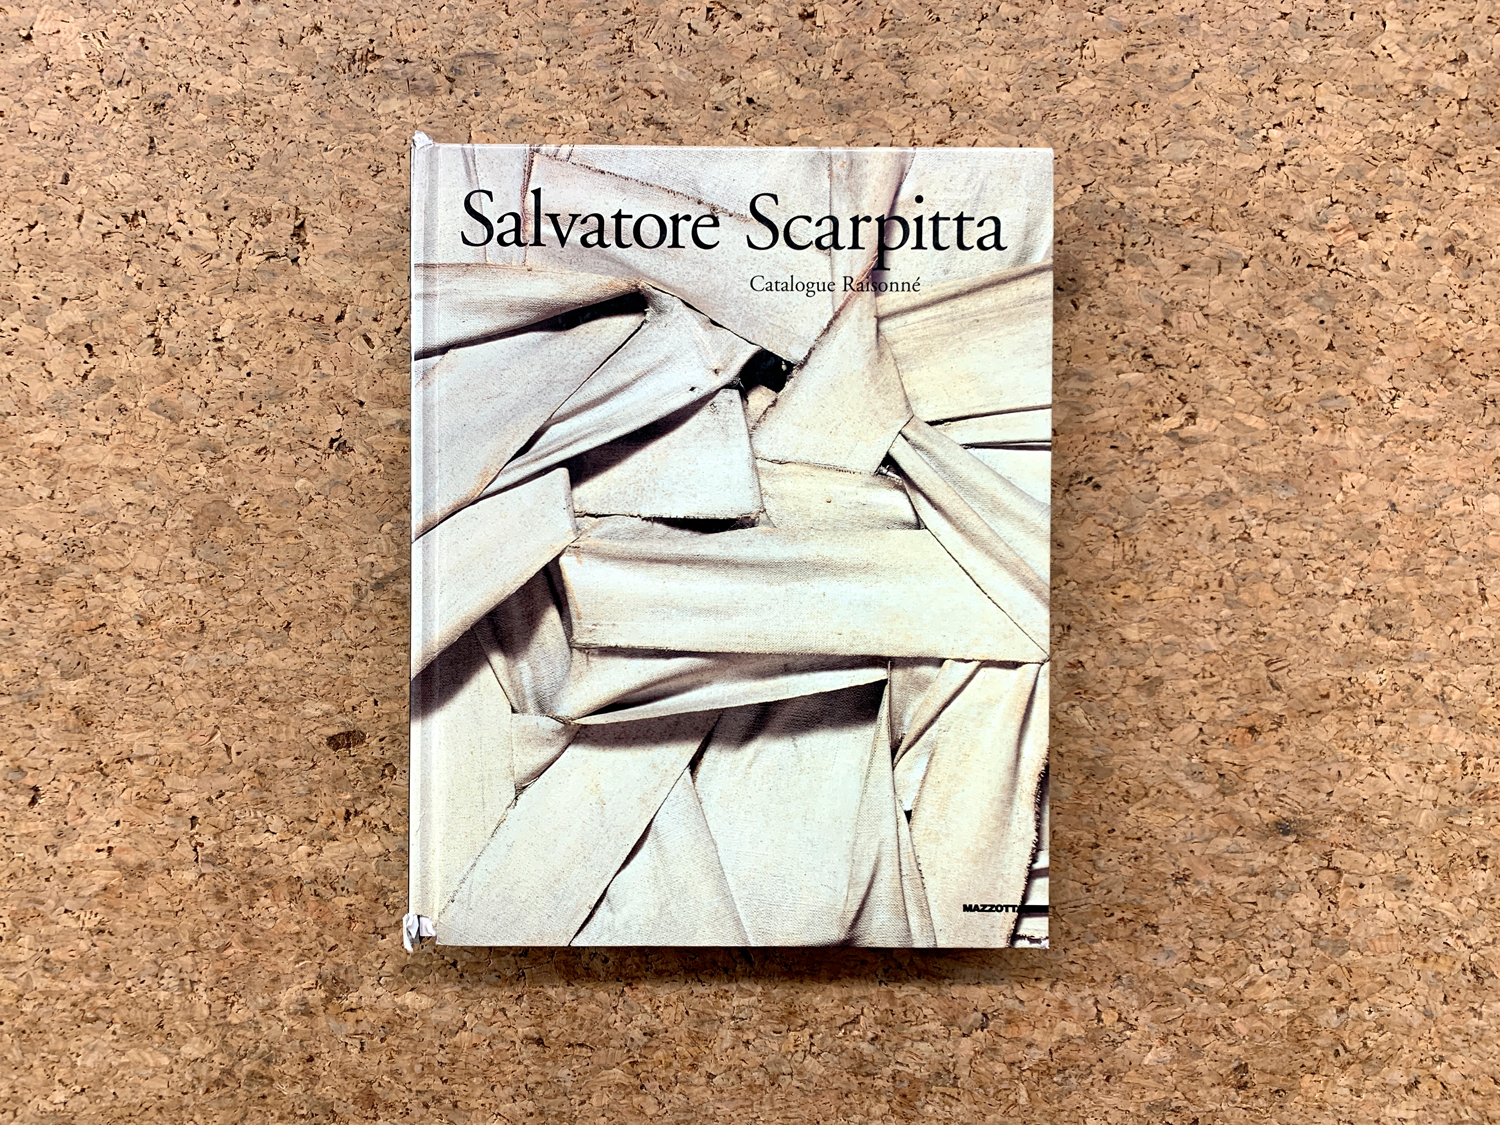 SALVATORE SCARPITTA - Salvatore Scarpitta. Catalogue Raisonné, 2005